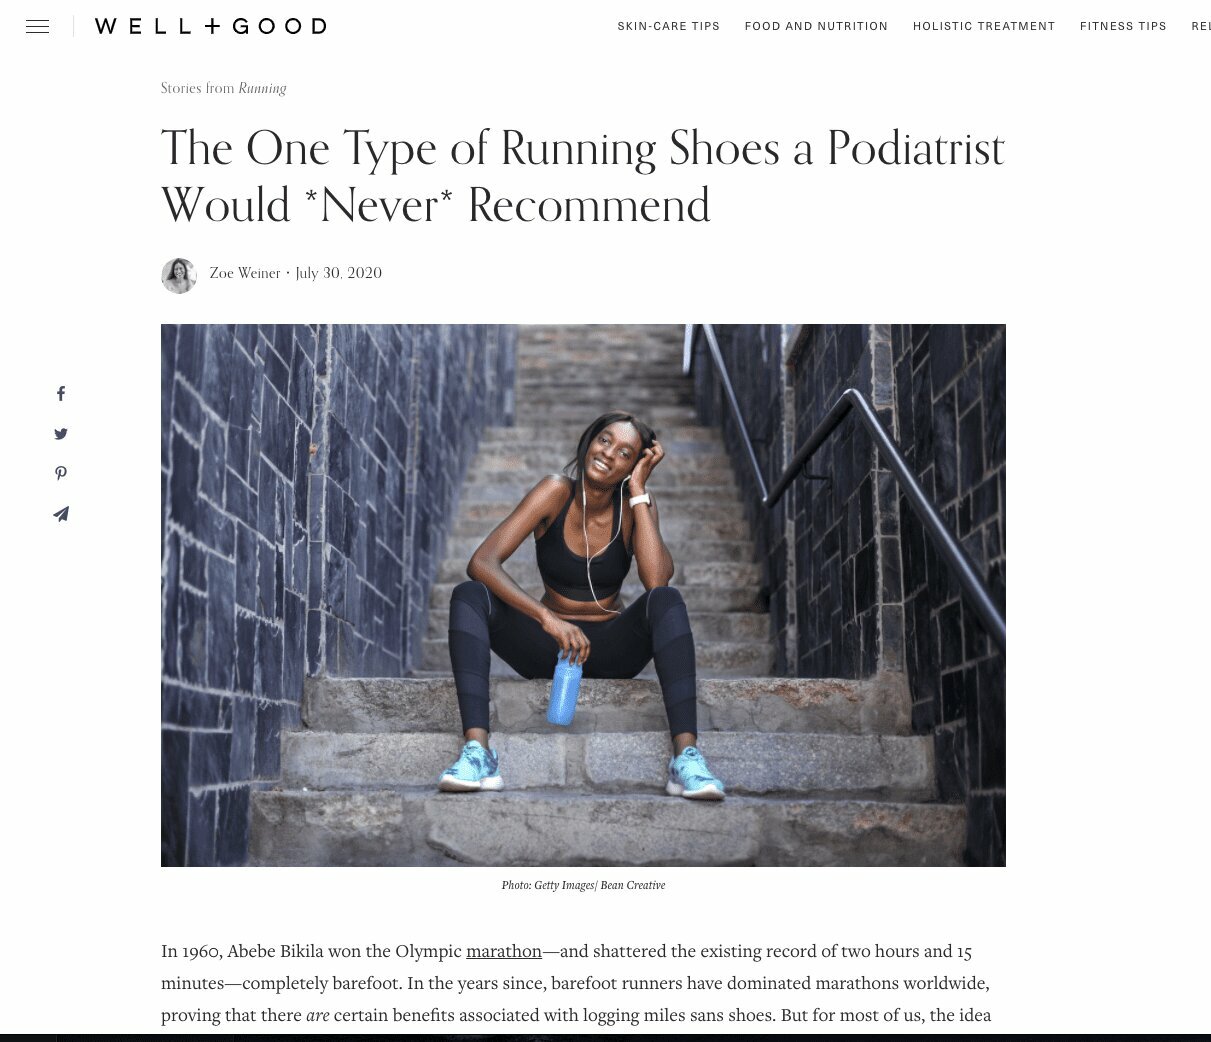 NYC Podiatrist Advises Well+Good Against Zero-Drop Shoes